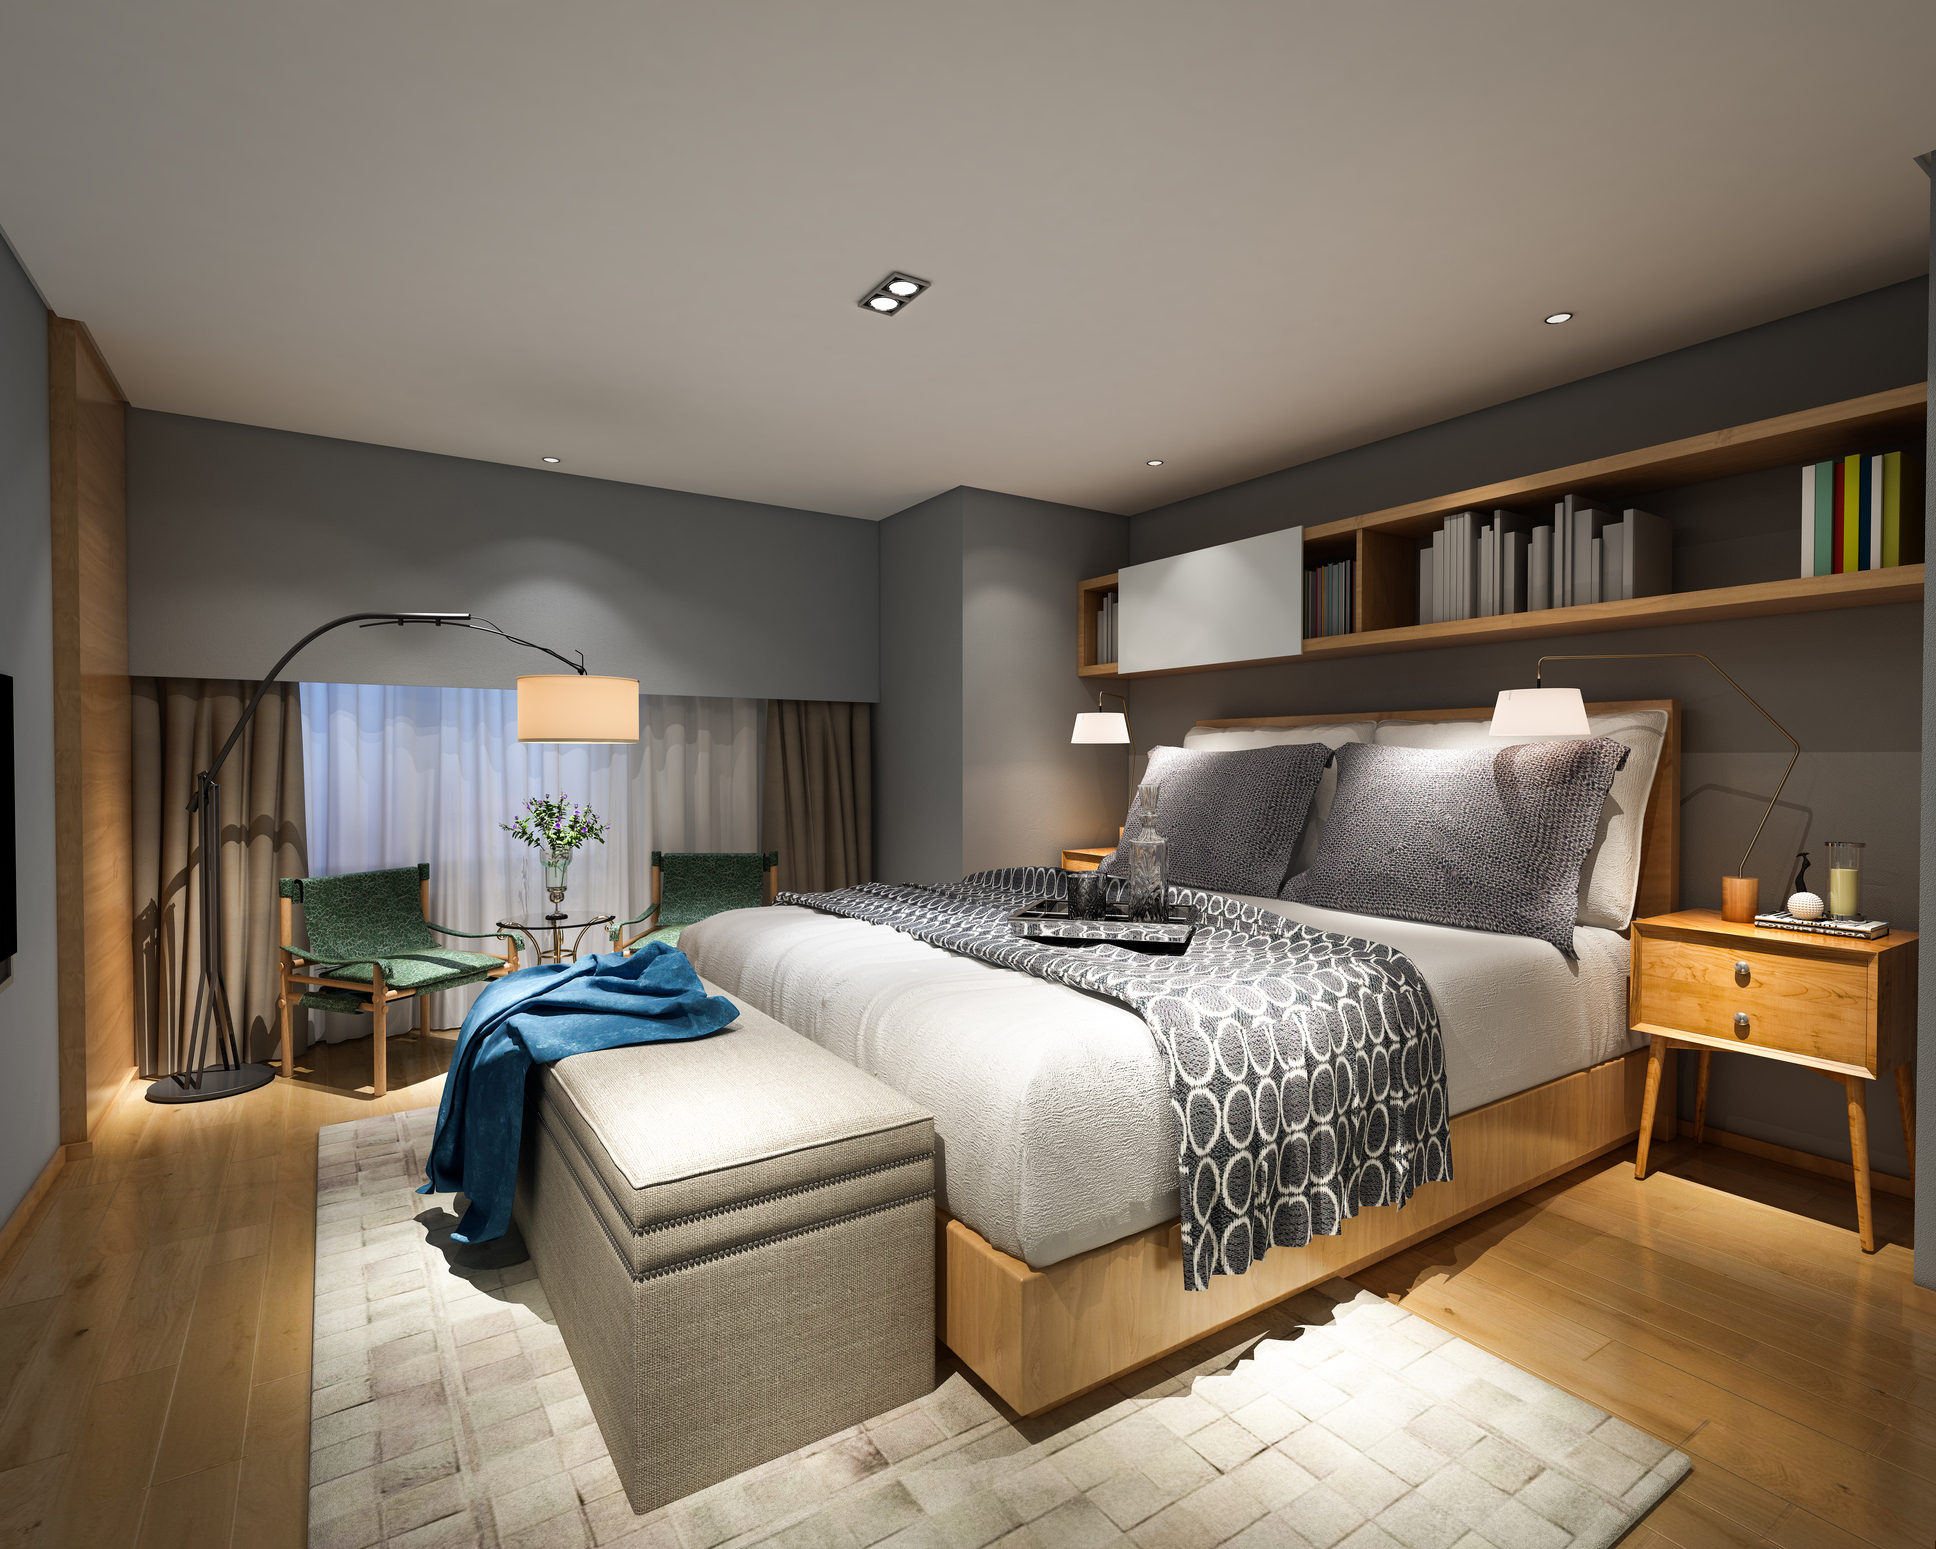 The 7 Best Tips For Designing A Bedroom Millionacres